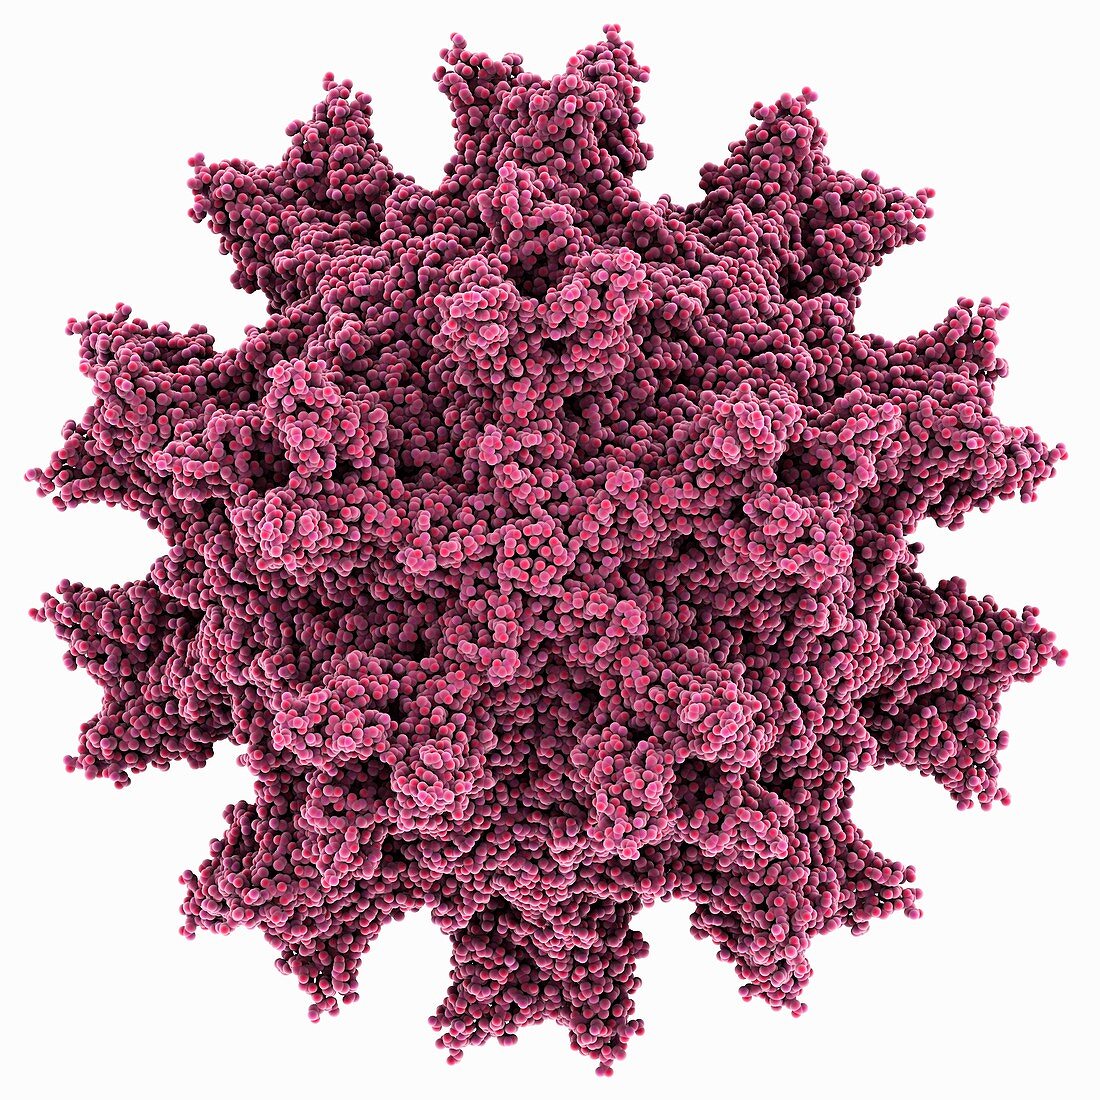 Infectious bursal disease virus capsid